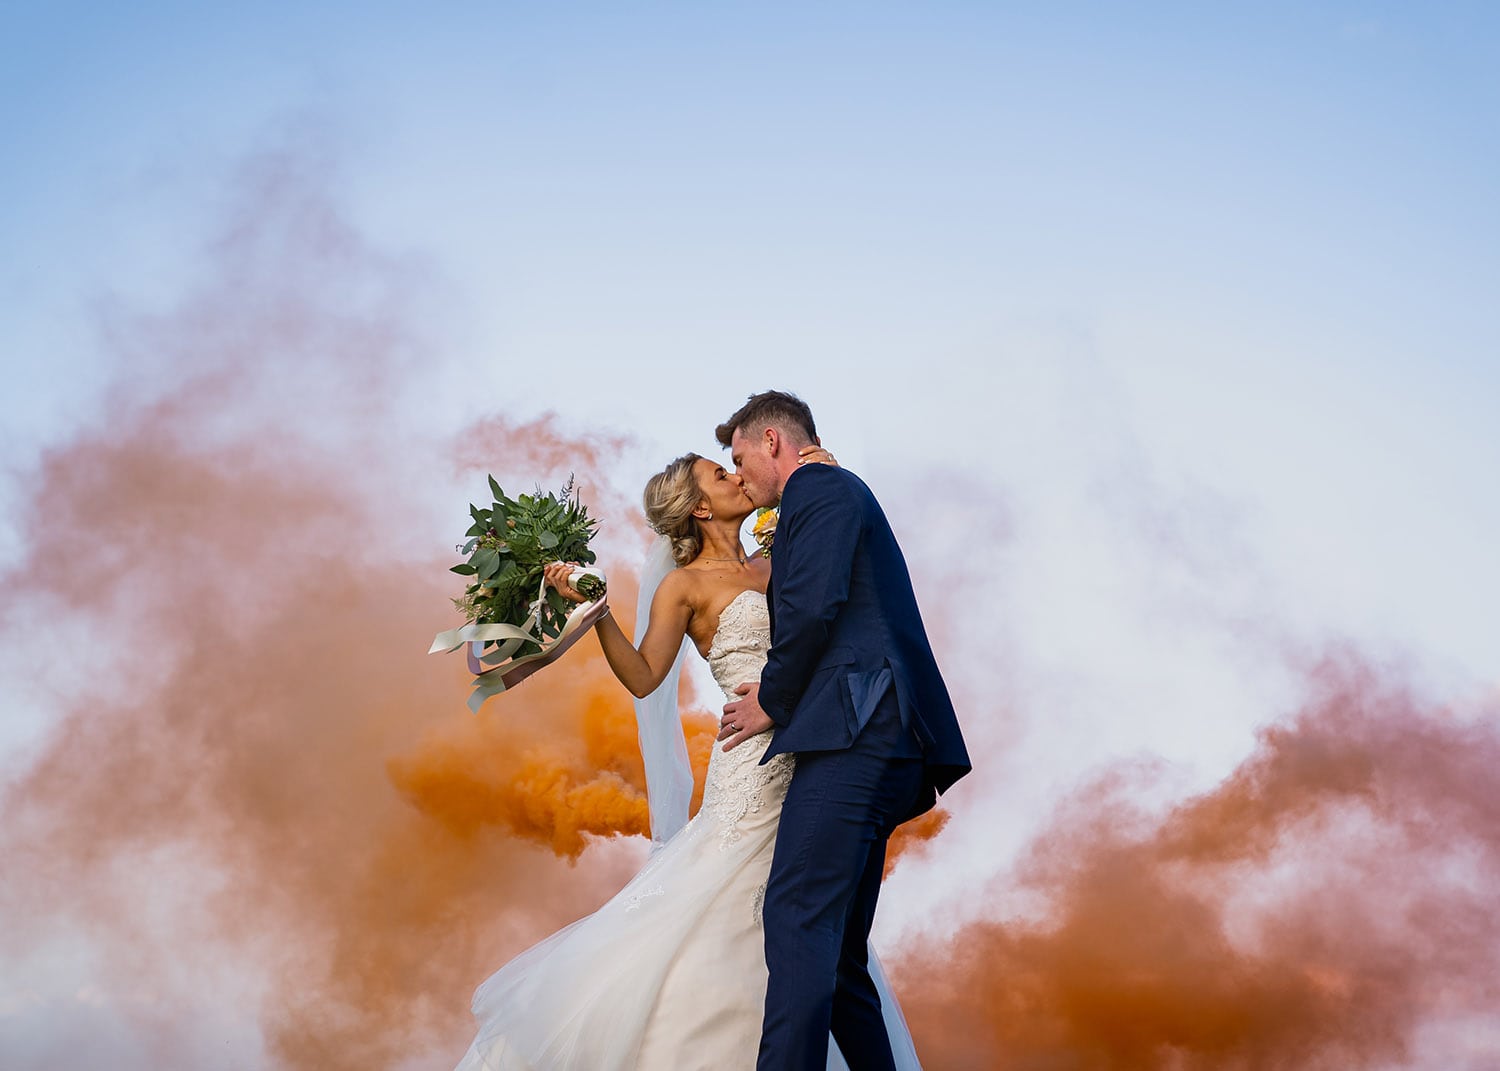 Lesley & Neil – Creative Windy Wedding